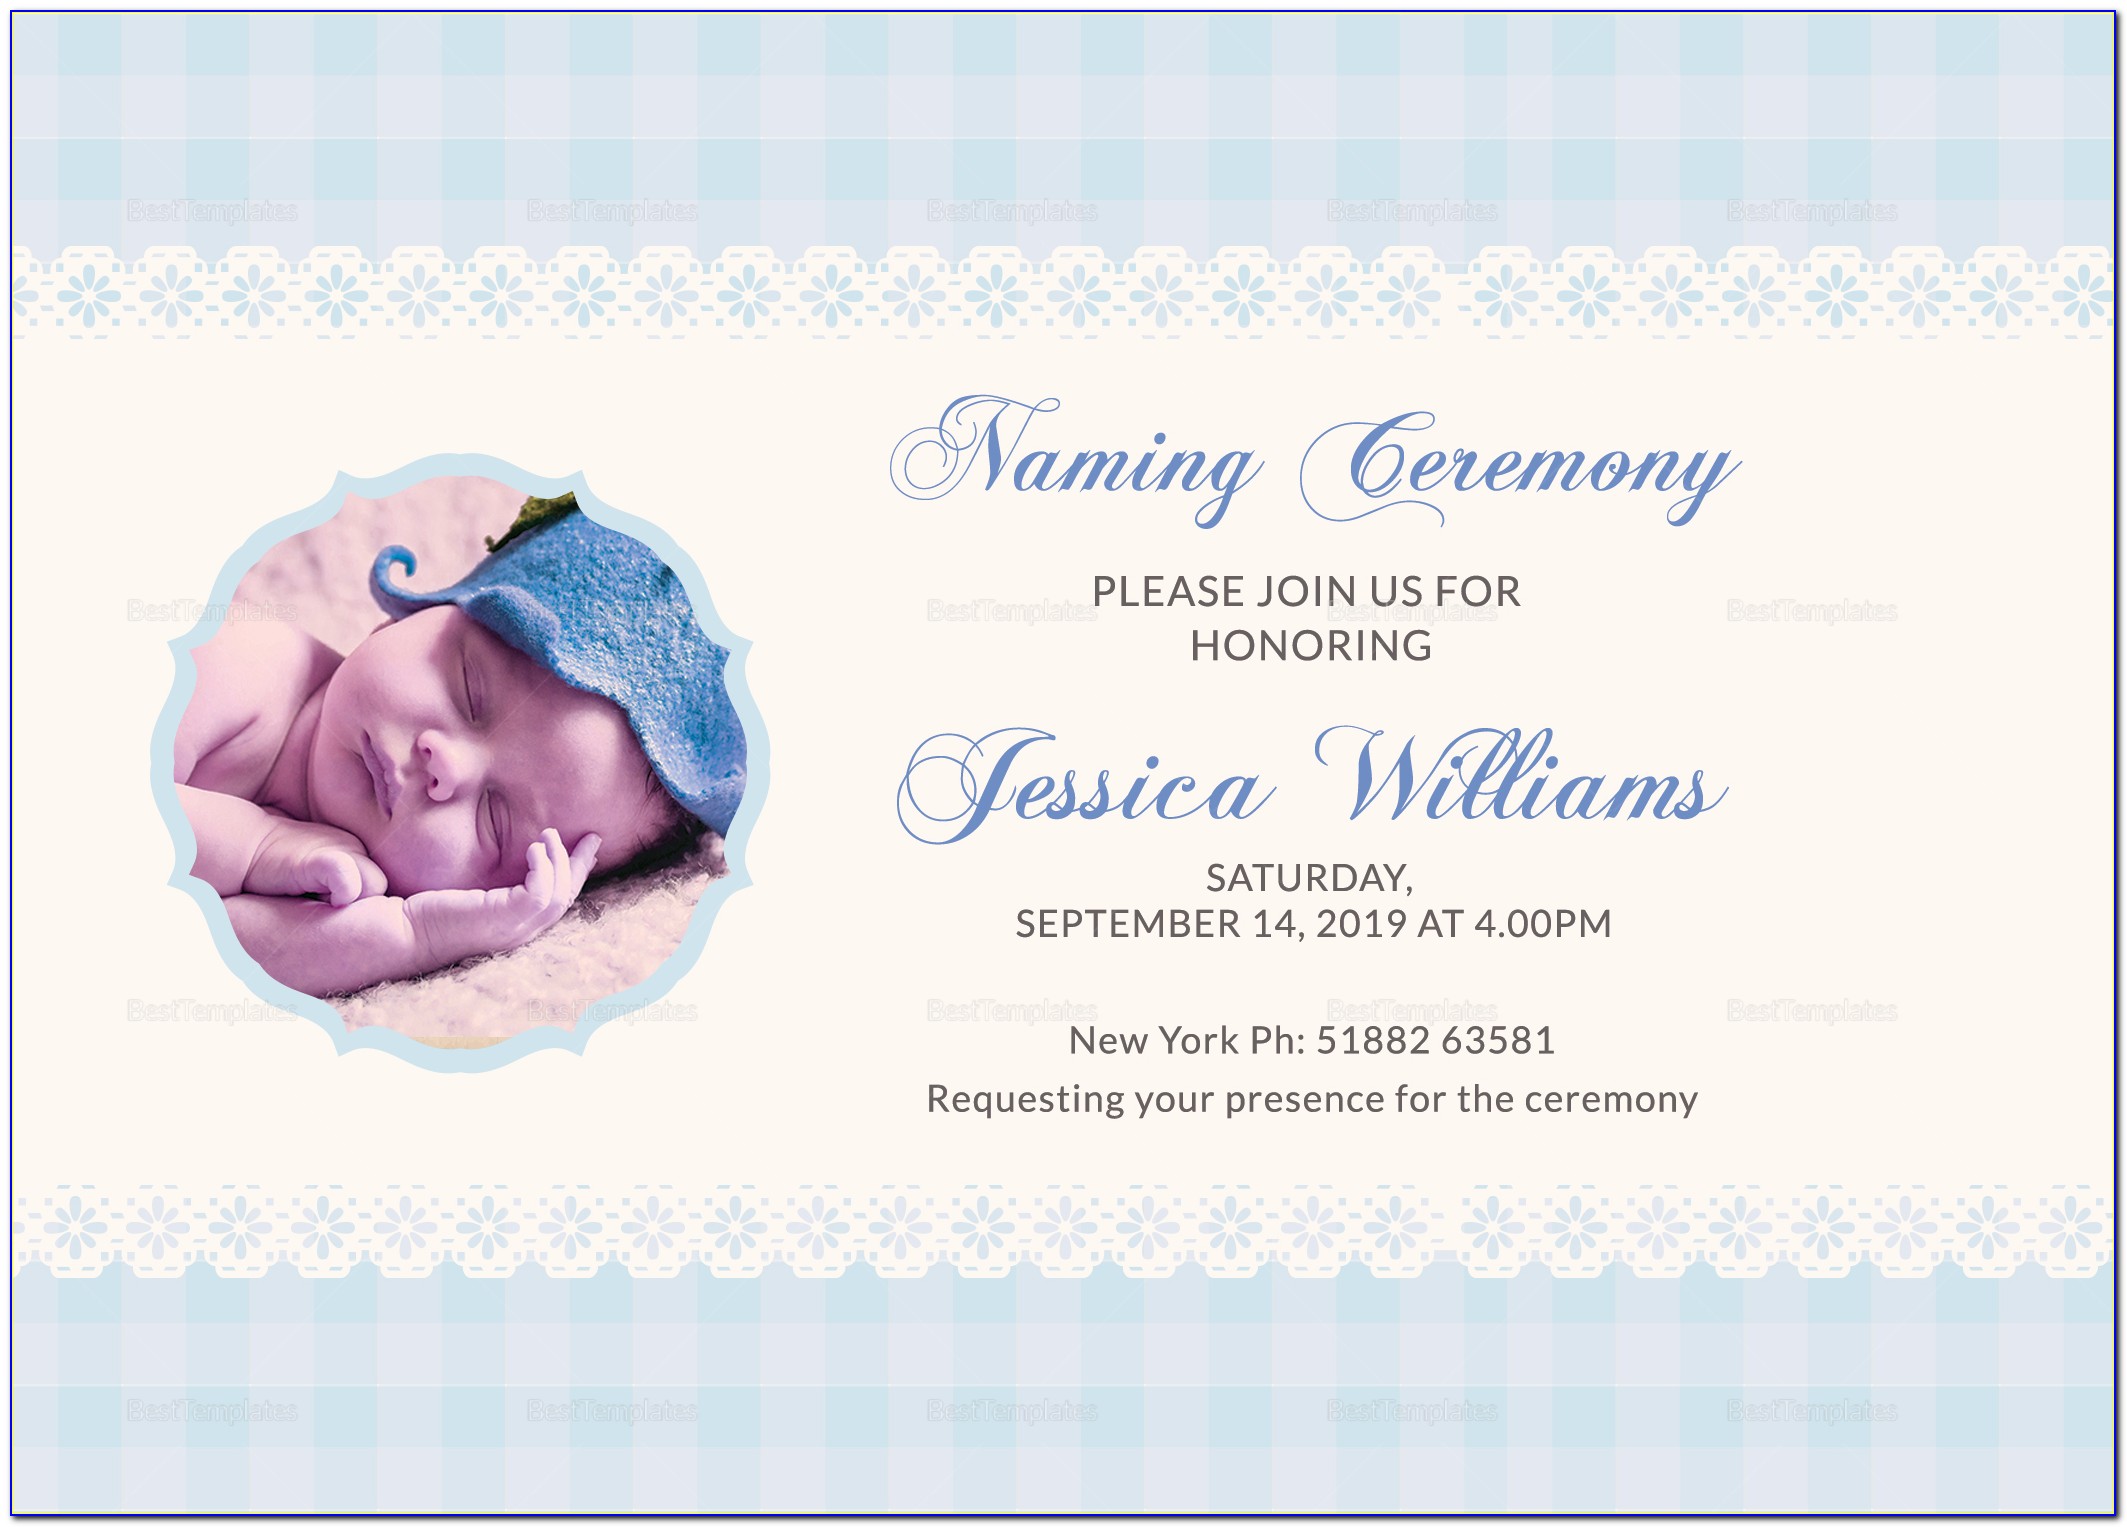 Naming Ceremony Invitation Card For Baby Girl